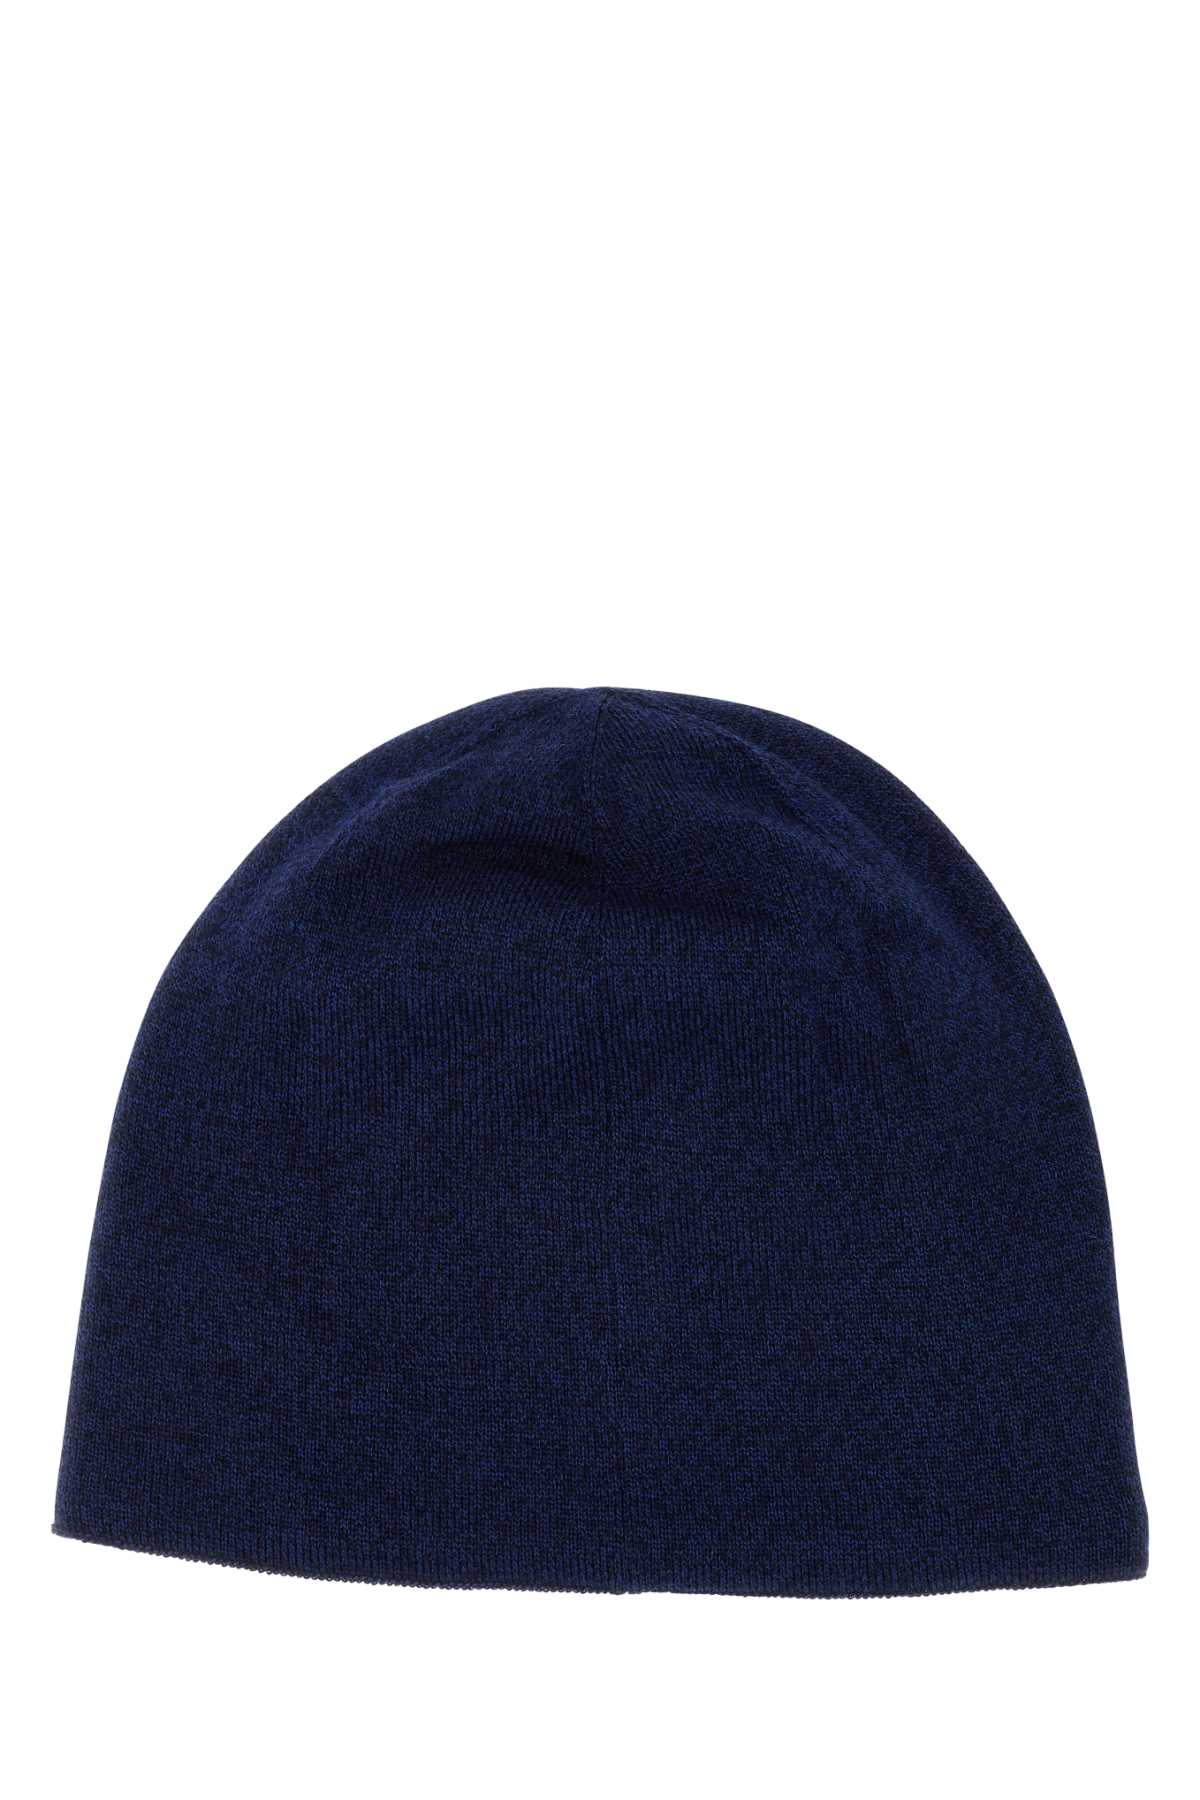 Canada Goose Melange Navy Blue Stretch Wool Blend Beanie Hat In 151